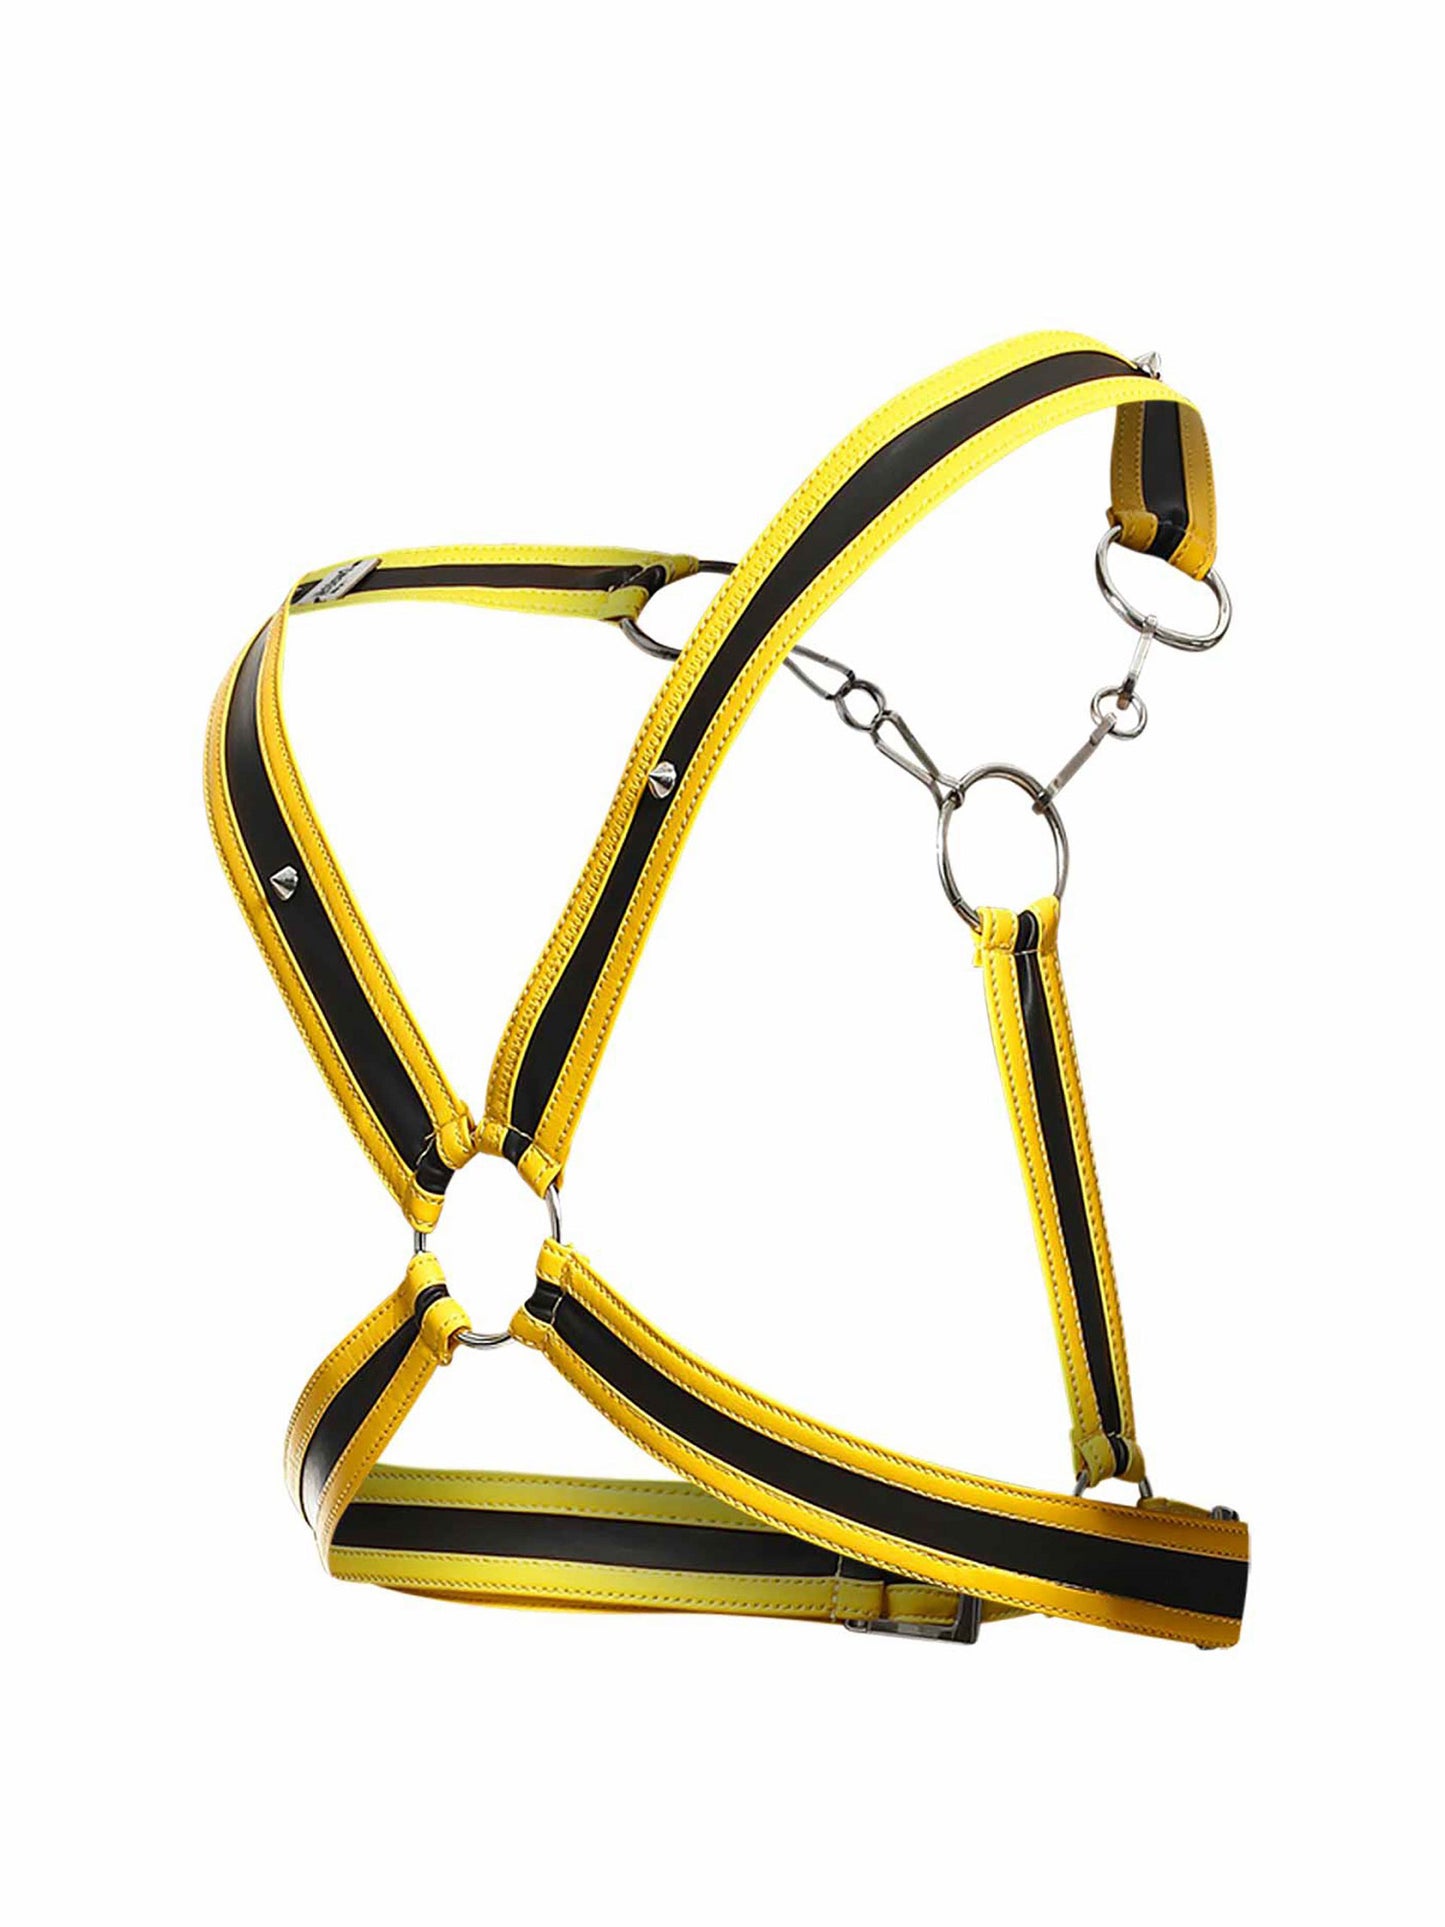 Dngeon - Cross Chain Harness Yellow